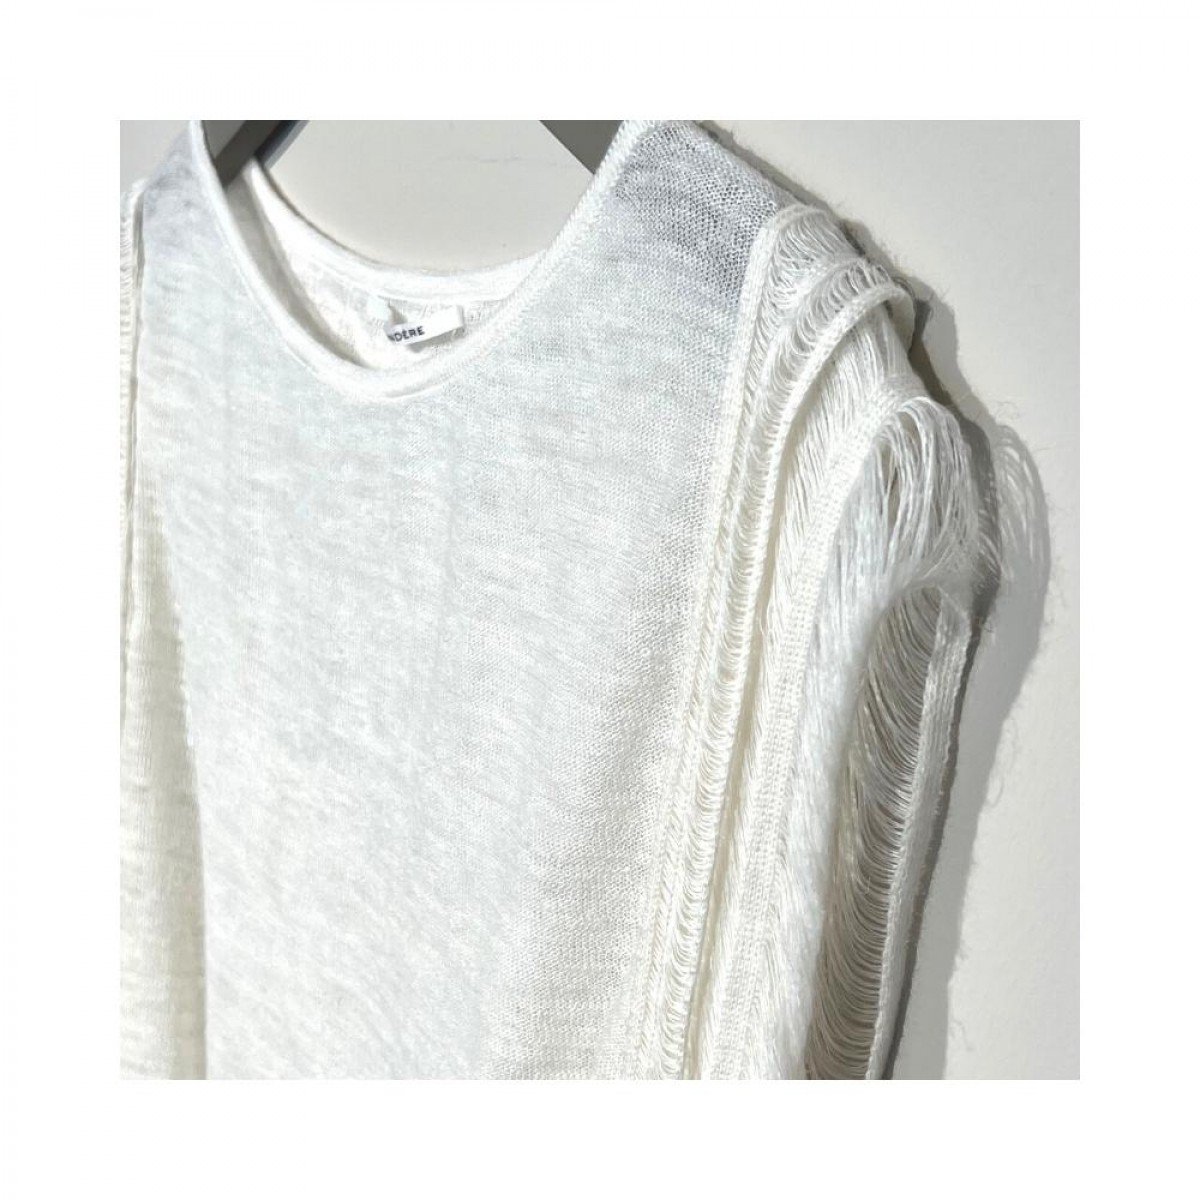 knit top pomandere - white - detalje